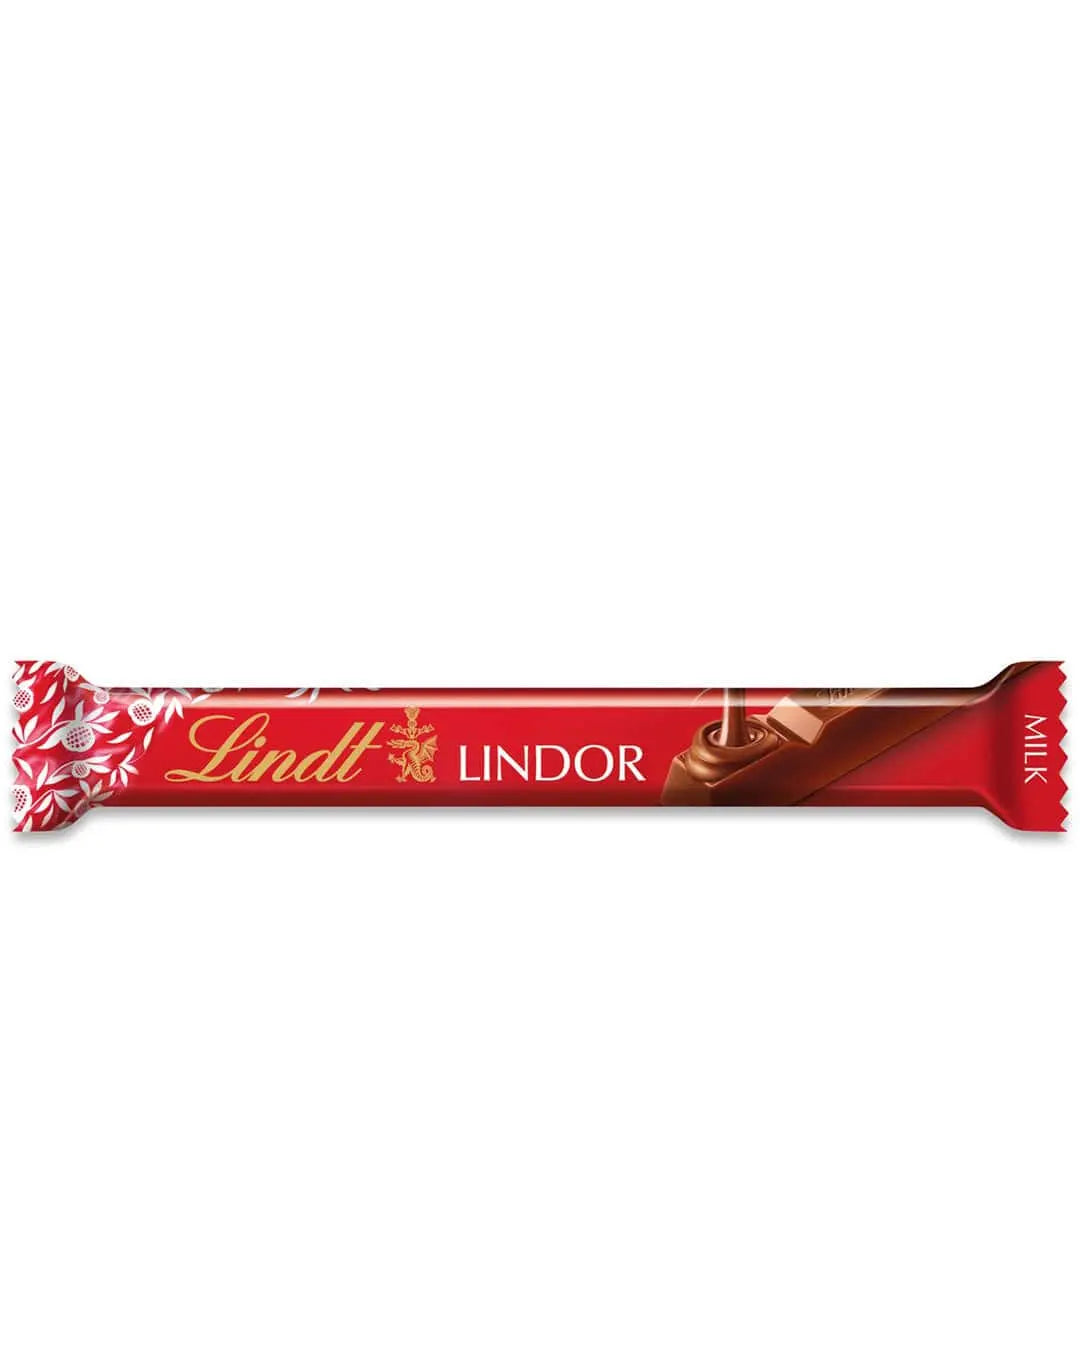 Lindt Lindor Milk Chocolate Truffle Bar, 38 g Chocolate